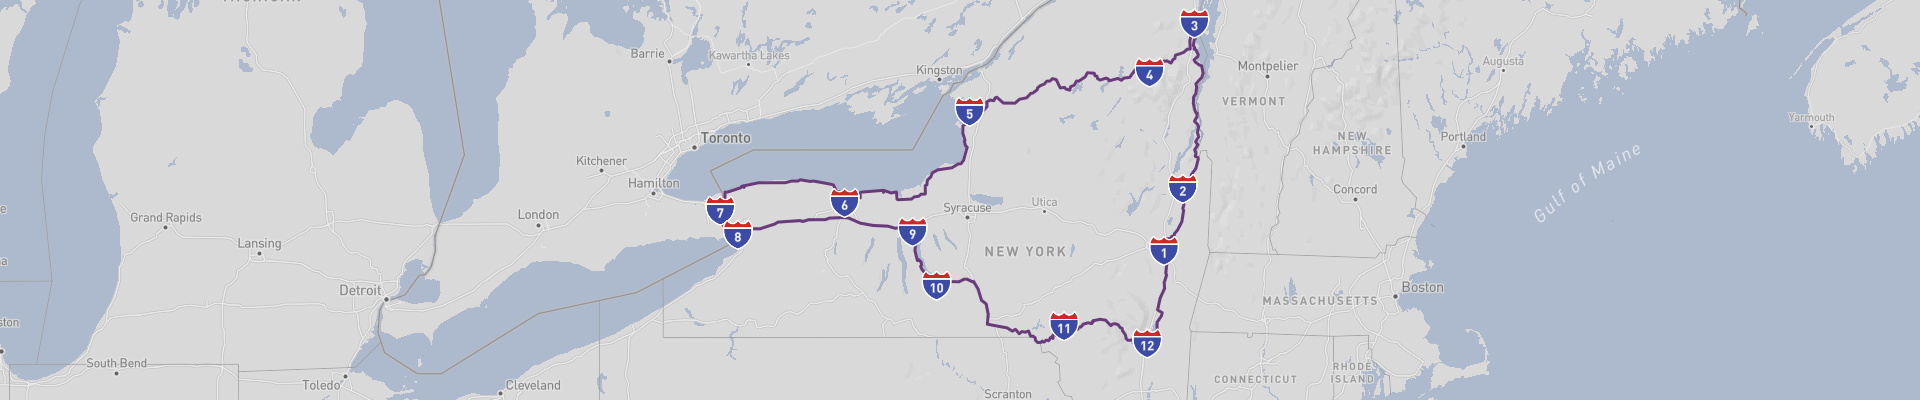 New York State Road Trip